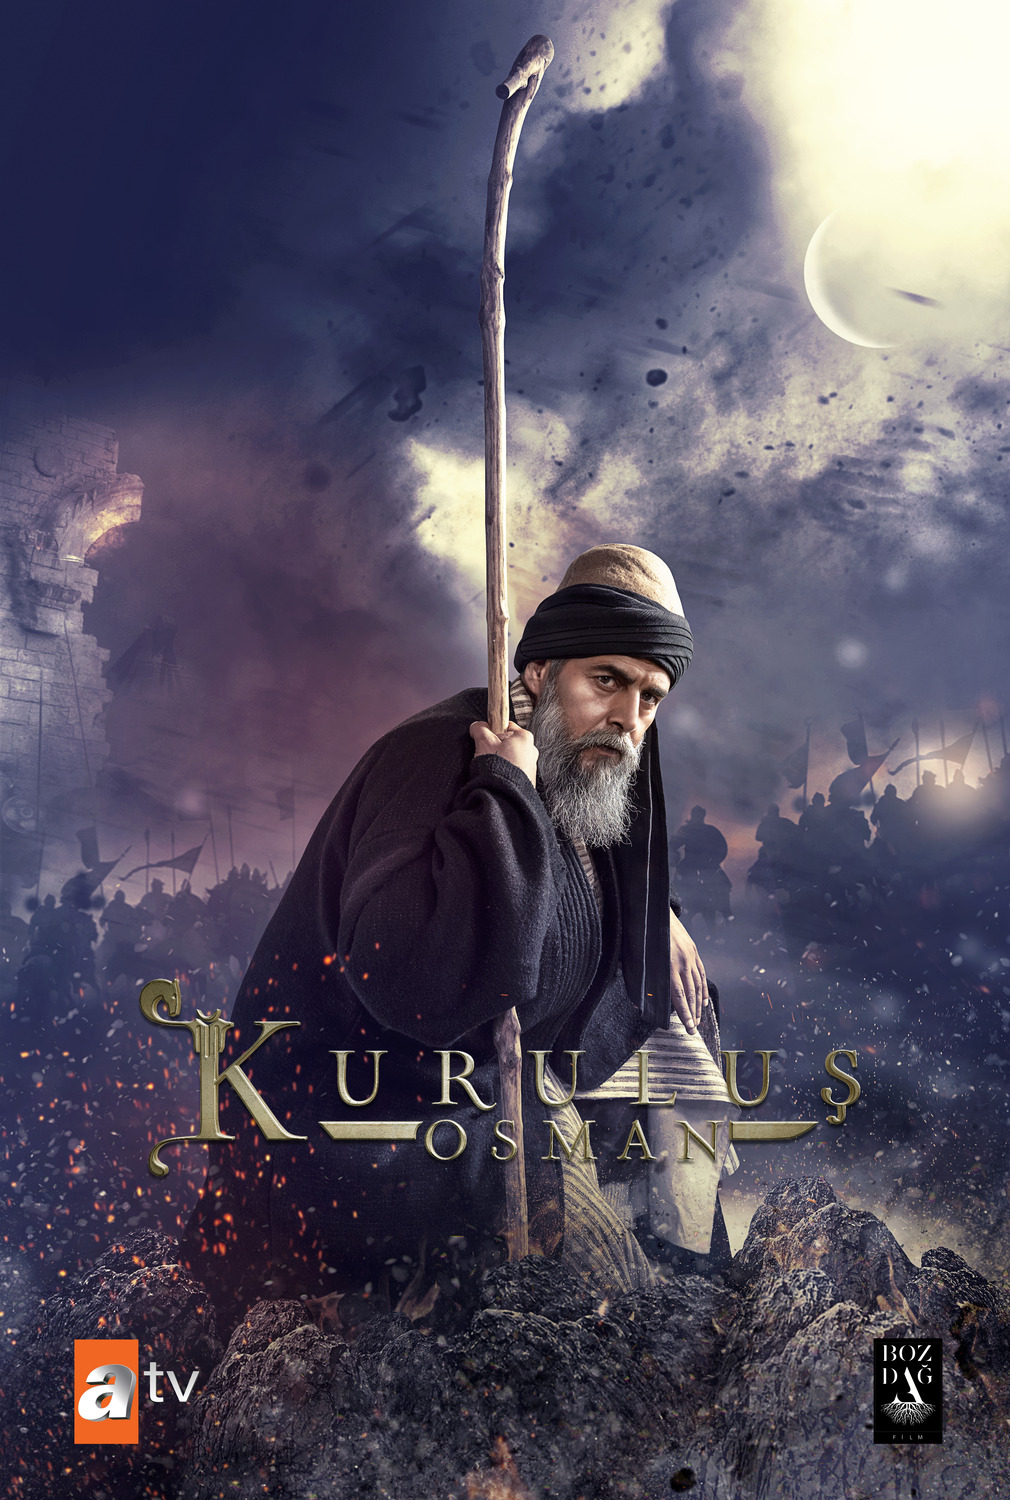 Extra Large TV Poster Image for Kurulus: Osman (#10 of 13)